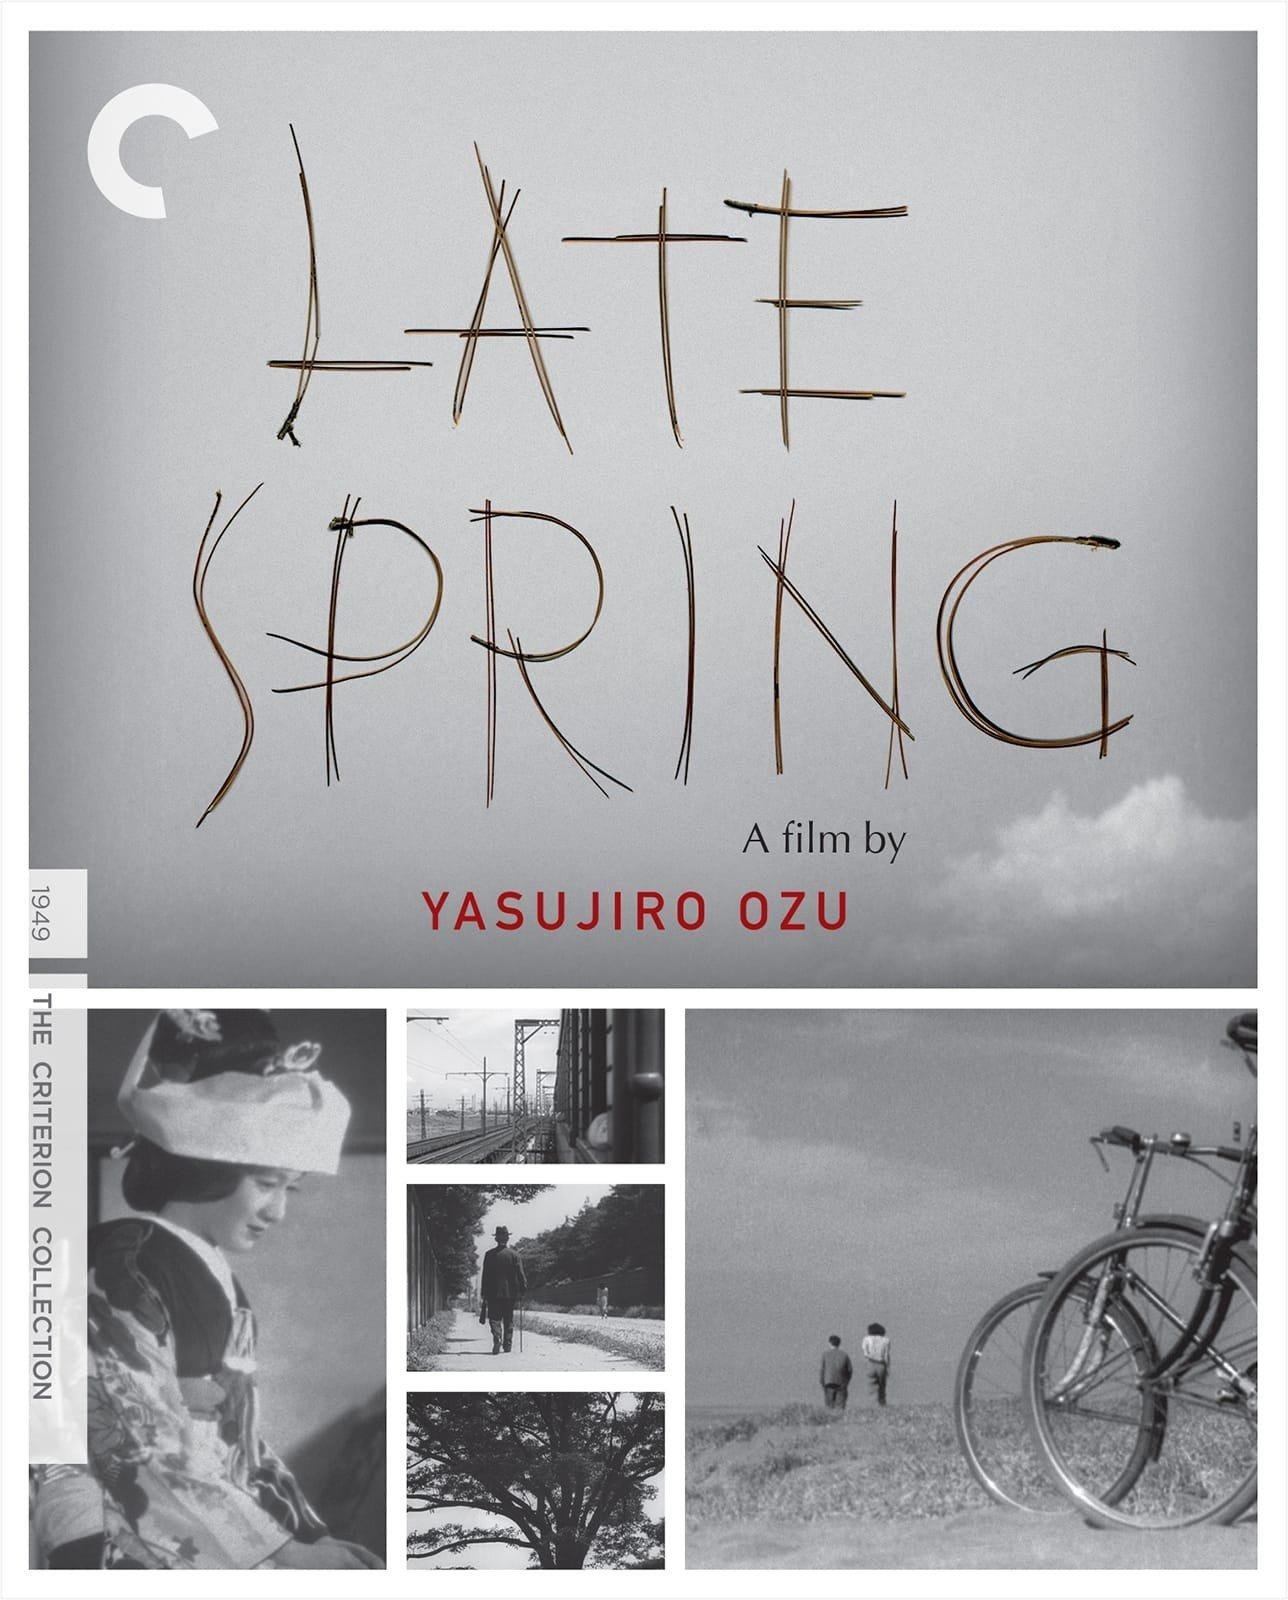 Yasujiro Ozu Late Spring Film Review 1680632921256